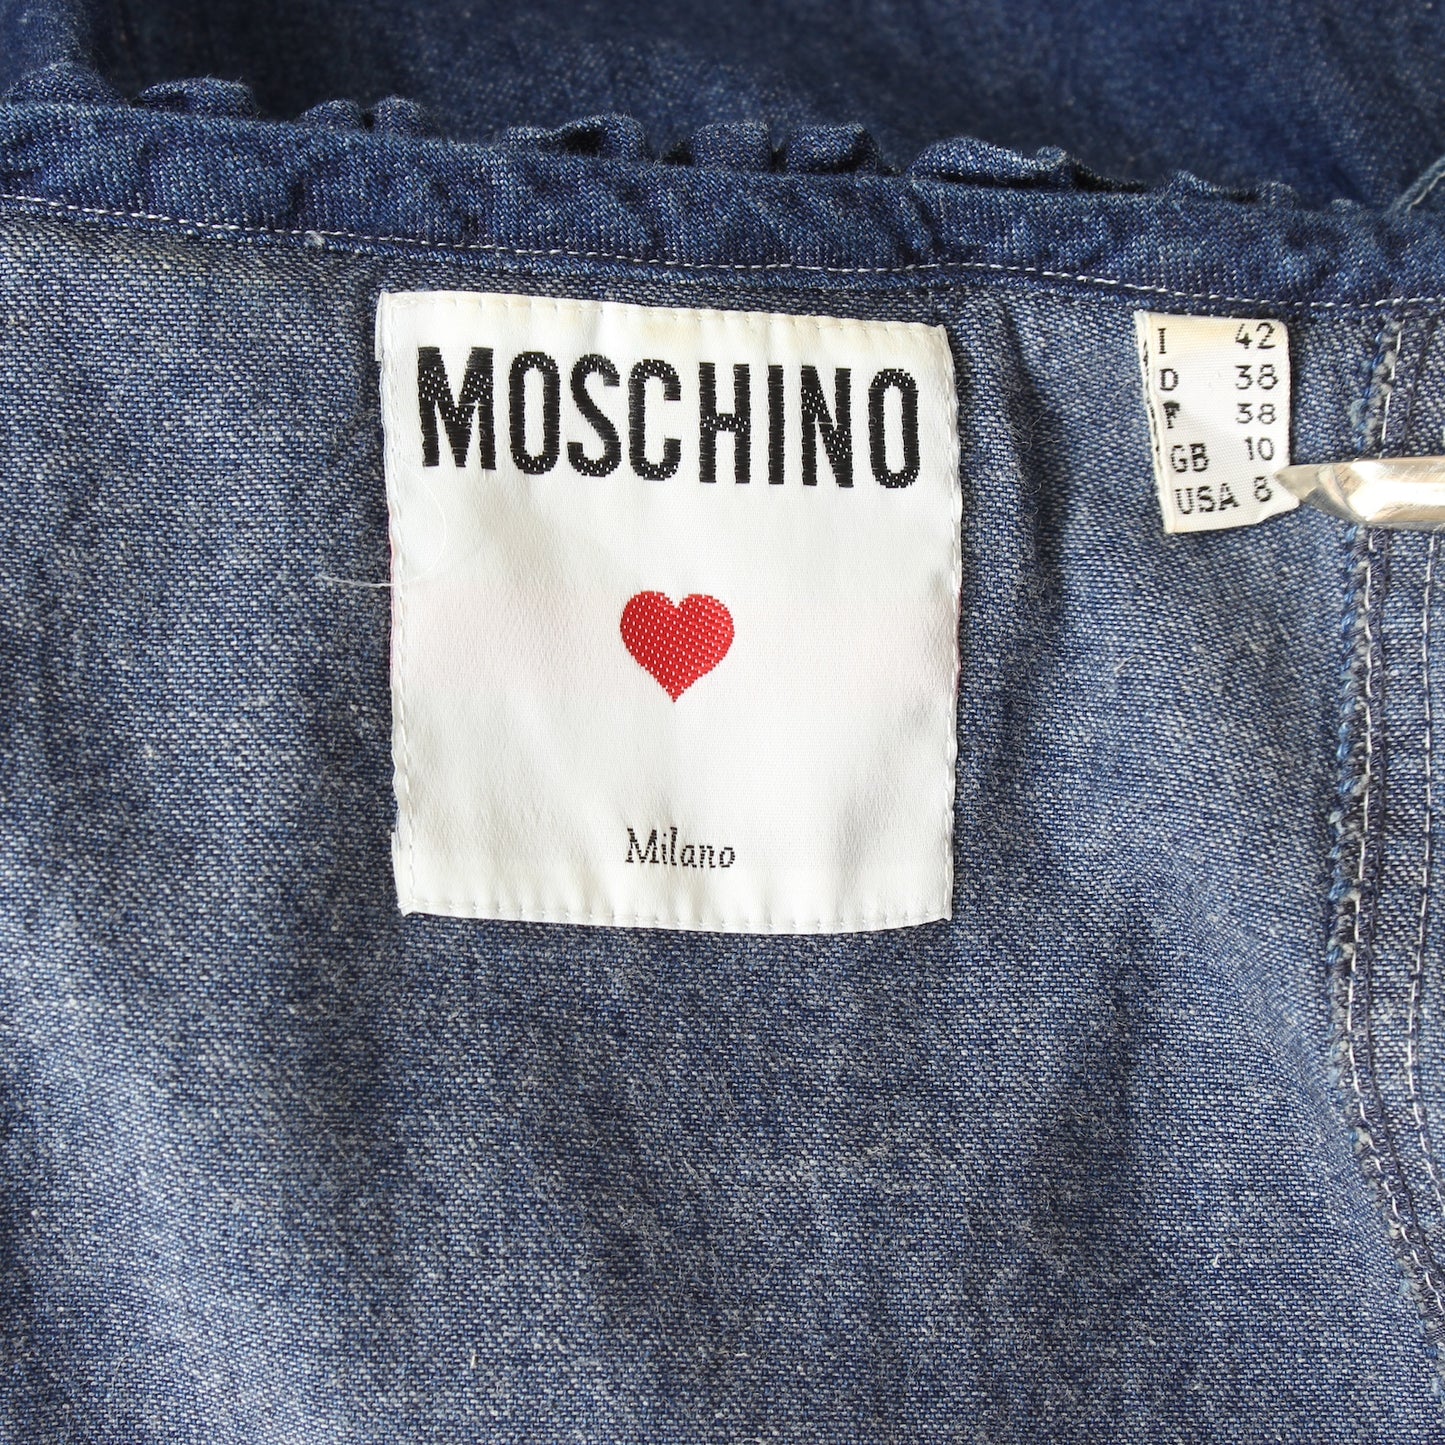 Moschino Vestito Jeans Blu Rouches Vintage Anni 80